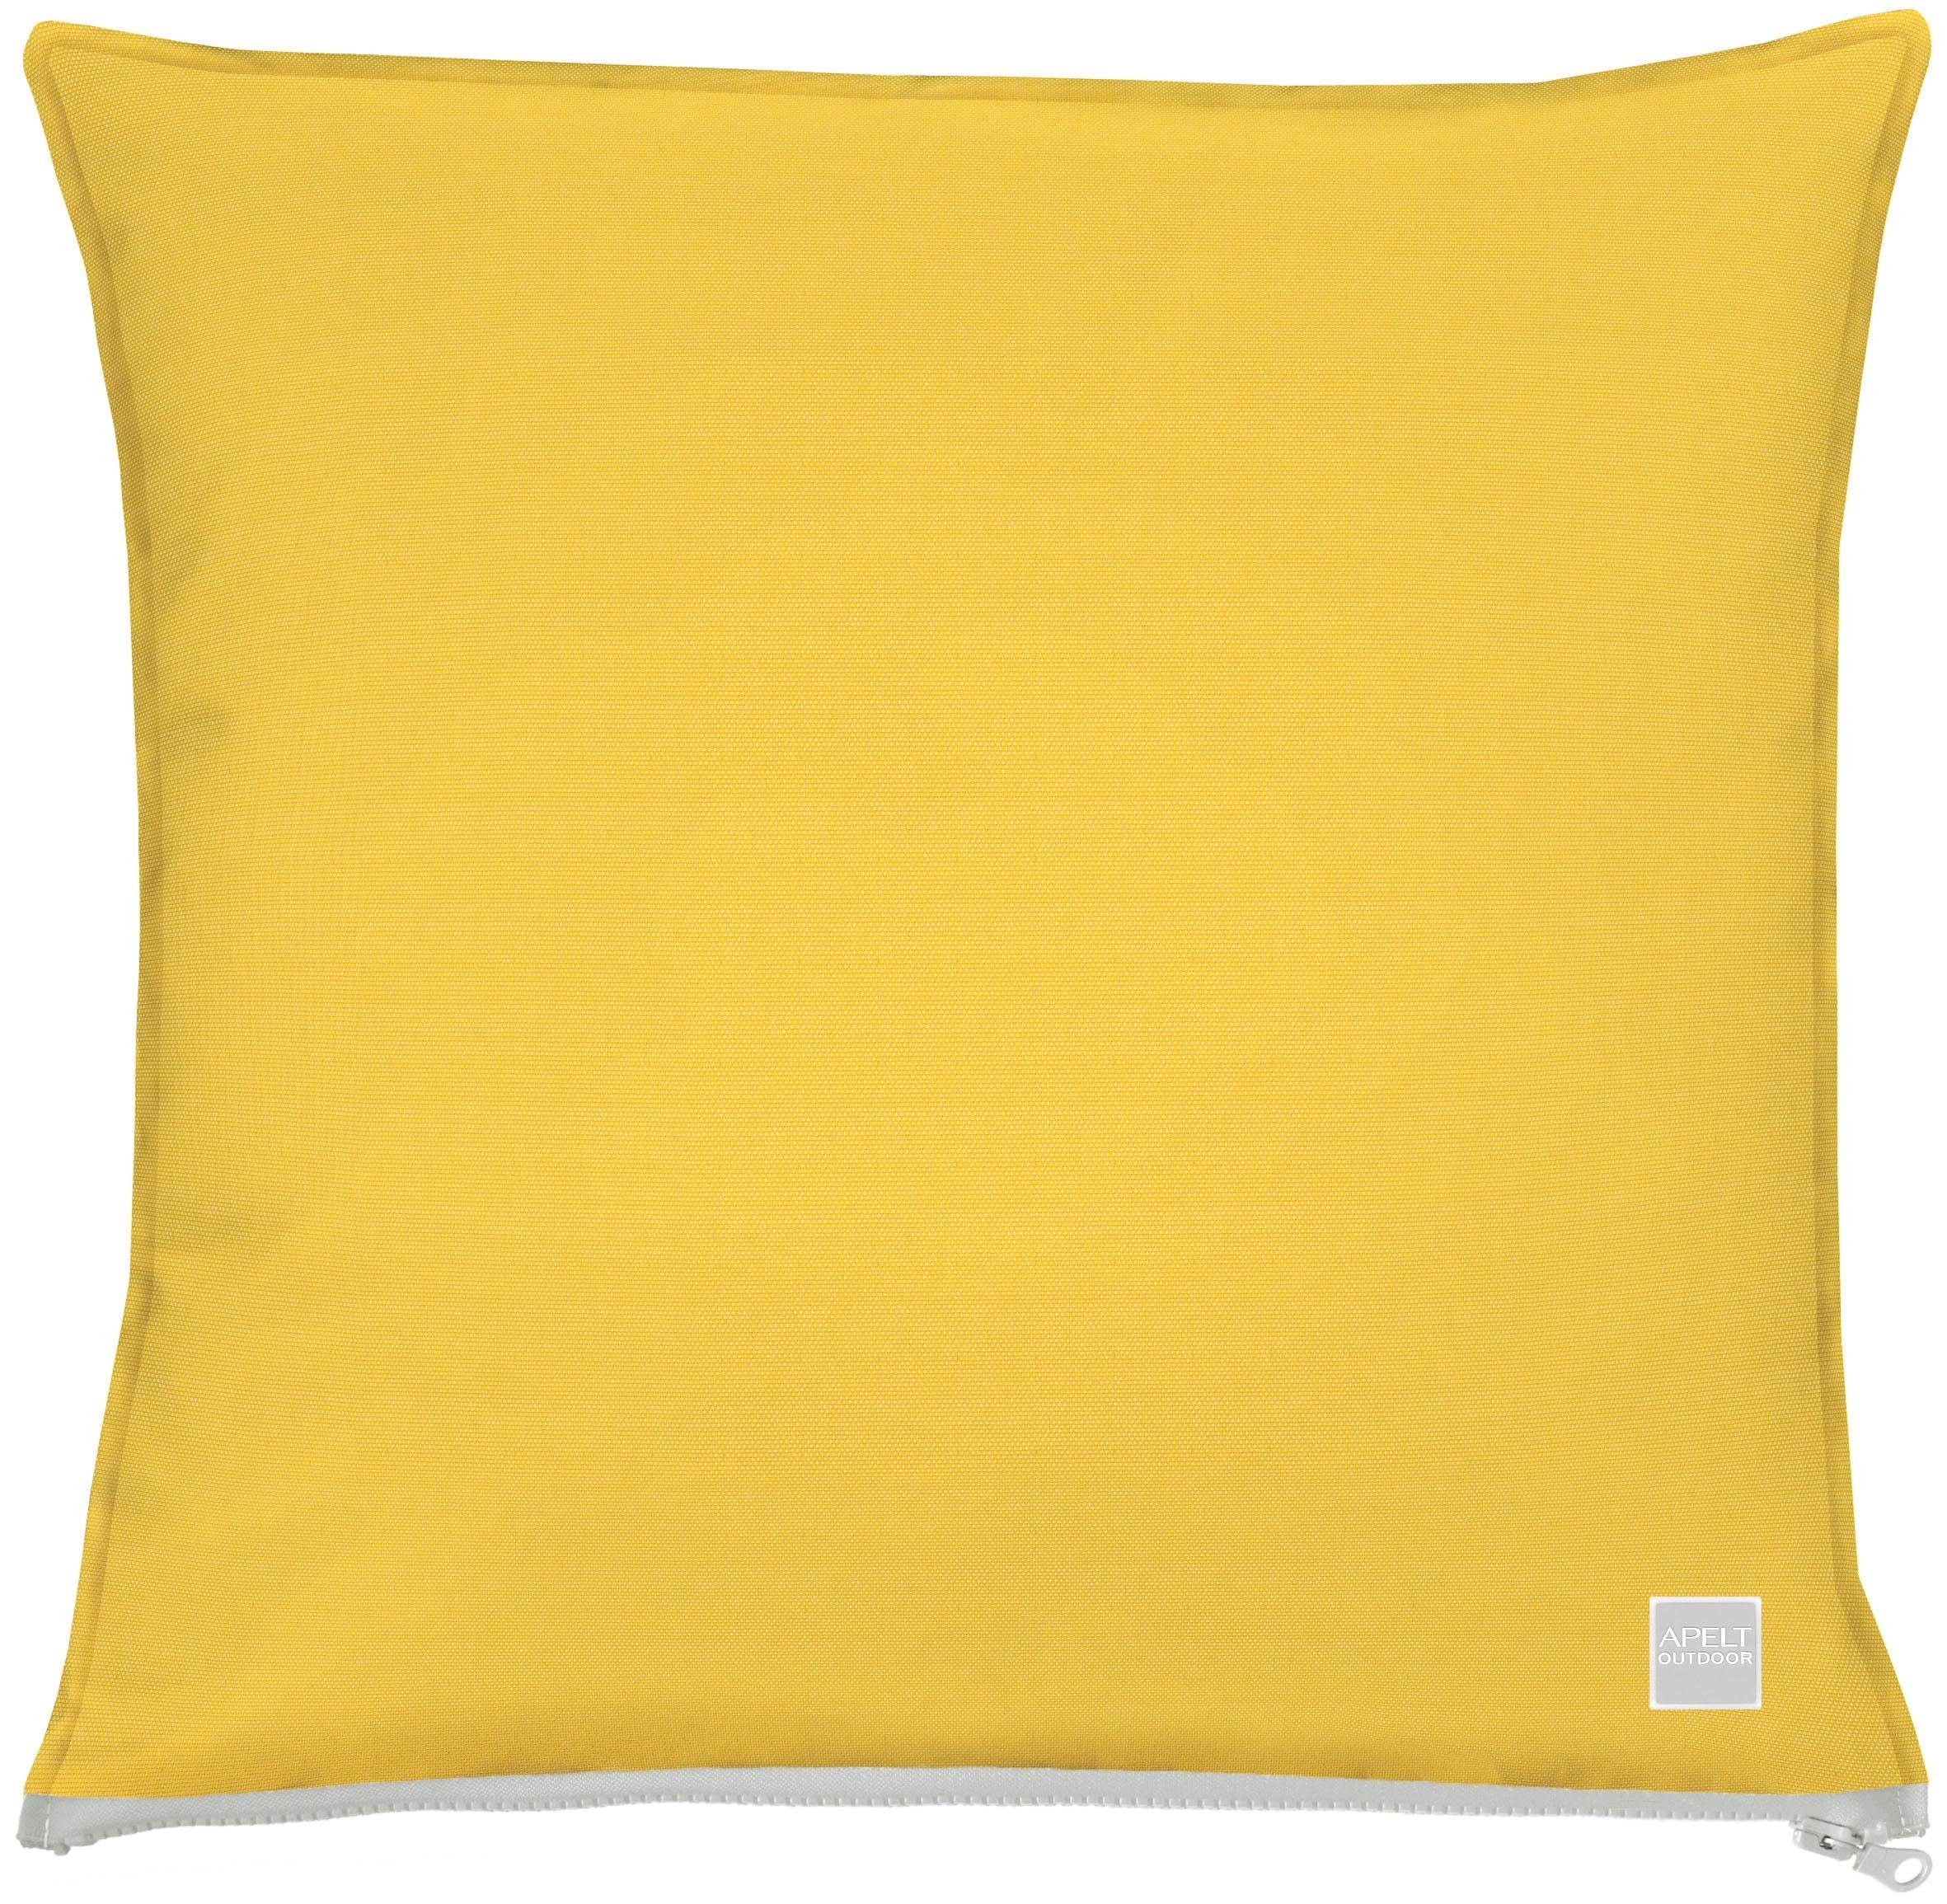 Kissenhülle 3959, APELT (1 Stück), Kissenhülle ohne Füllung, 1 Stück gelb